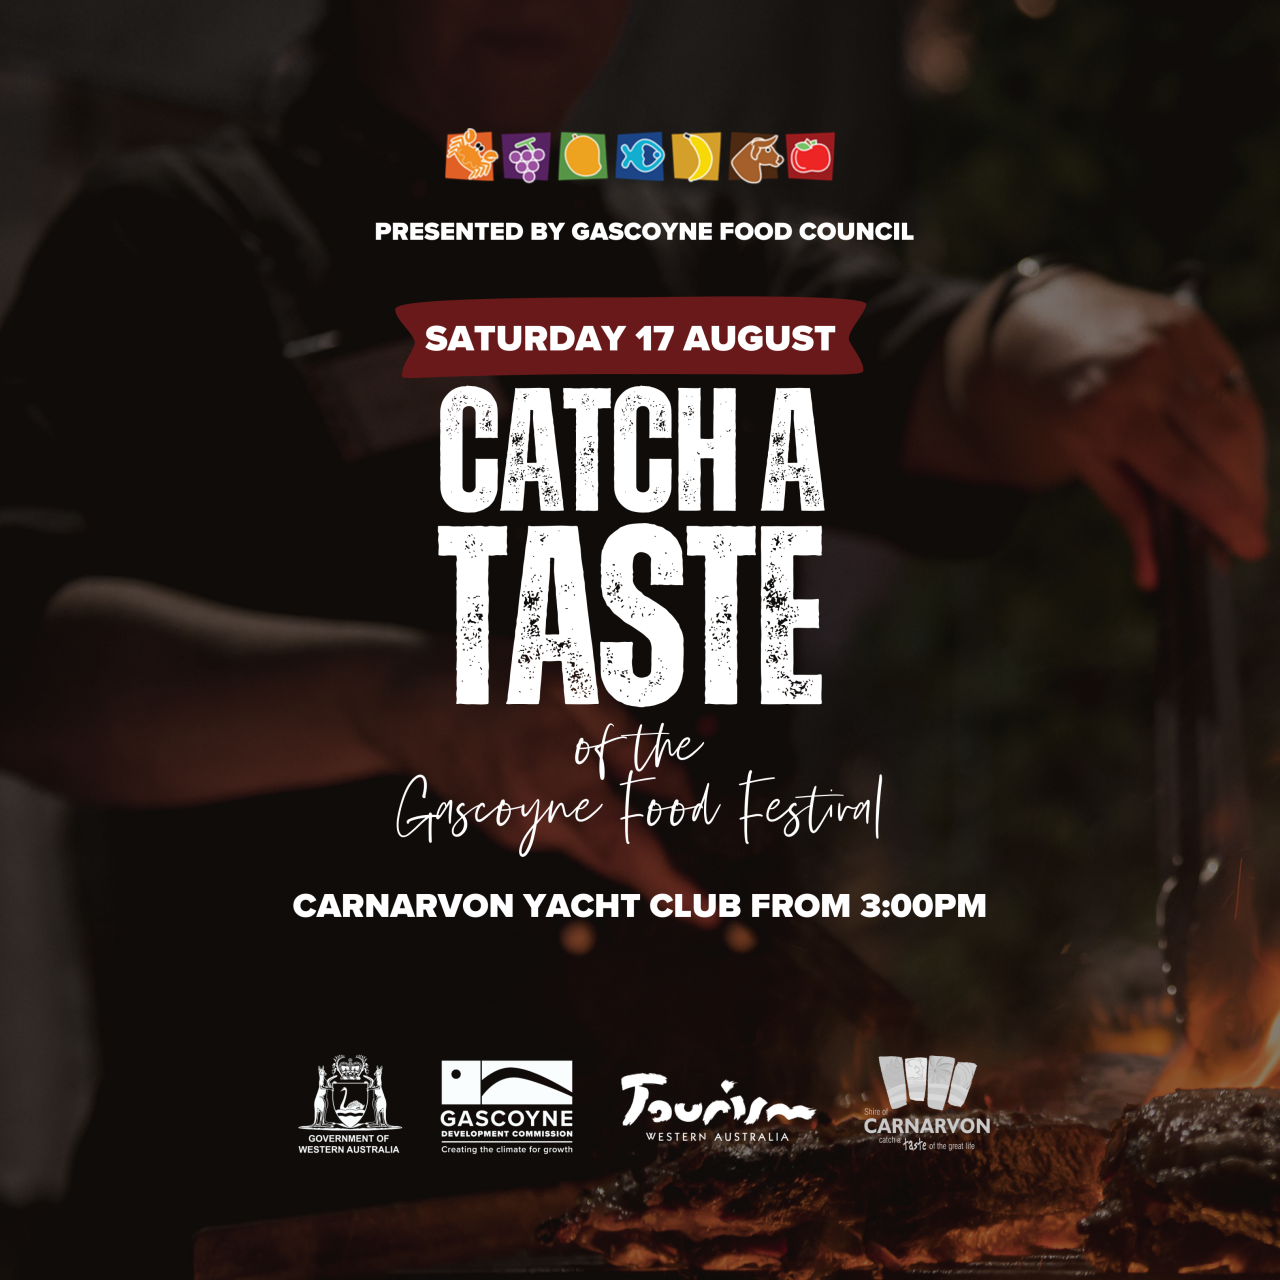 CATCH A TASTE of the Gascoyne Food Festival